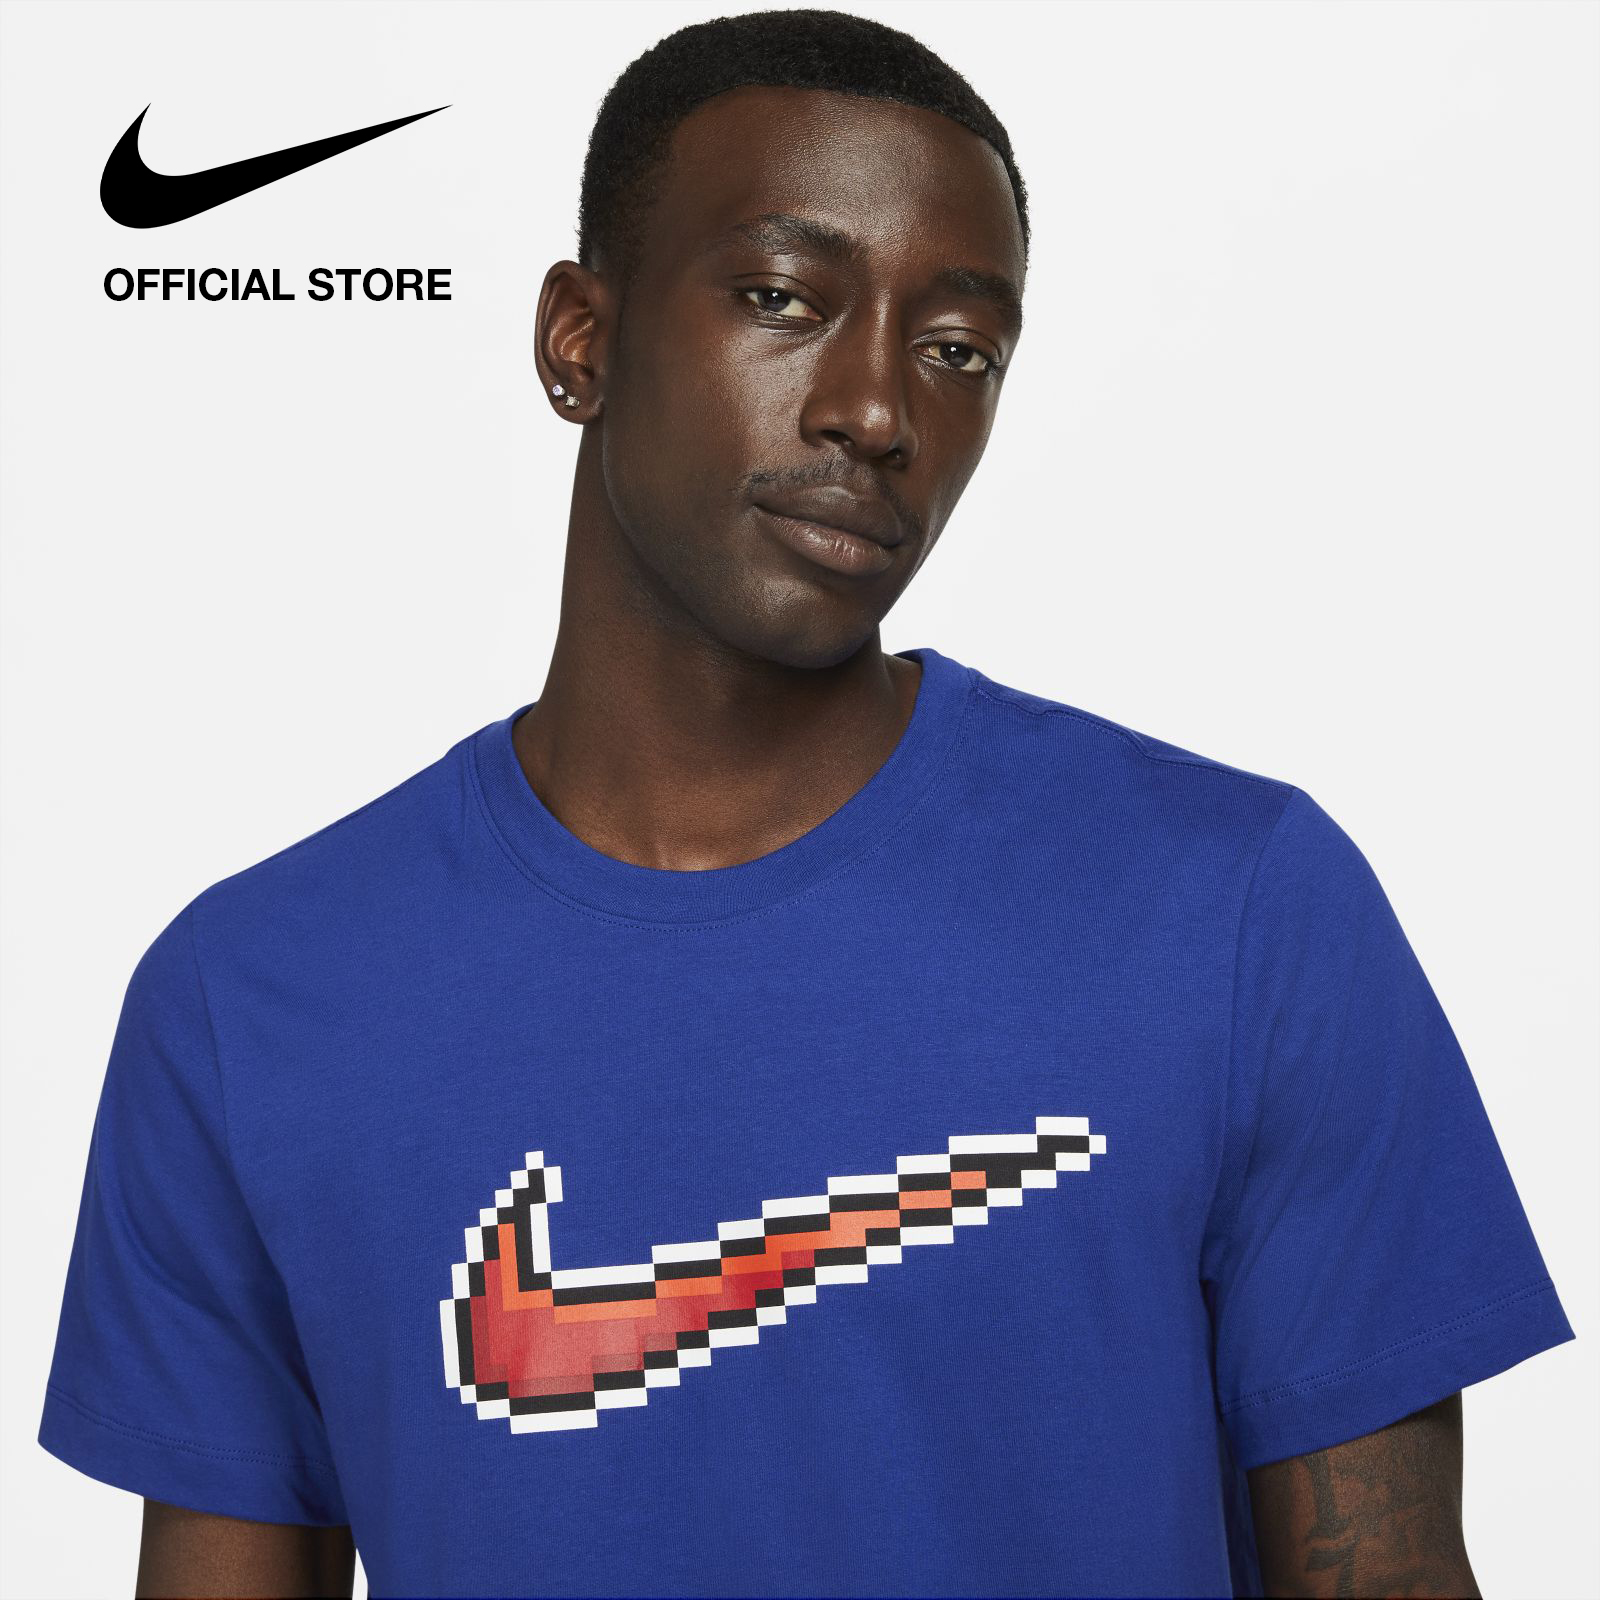 Nike Men's Swoosh T-Shirt - Blue เสื้อยืดผู้ชาย Nike Swoosh - สีฟ้า